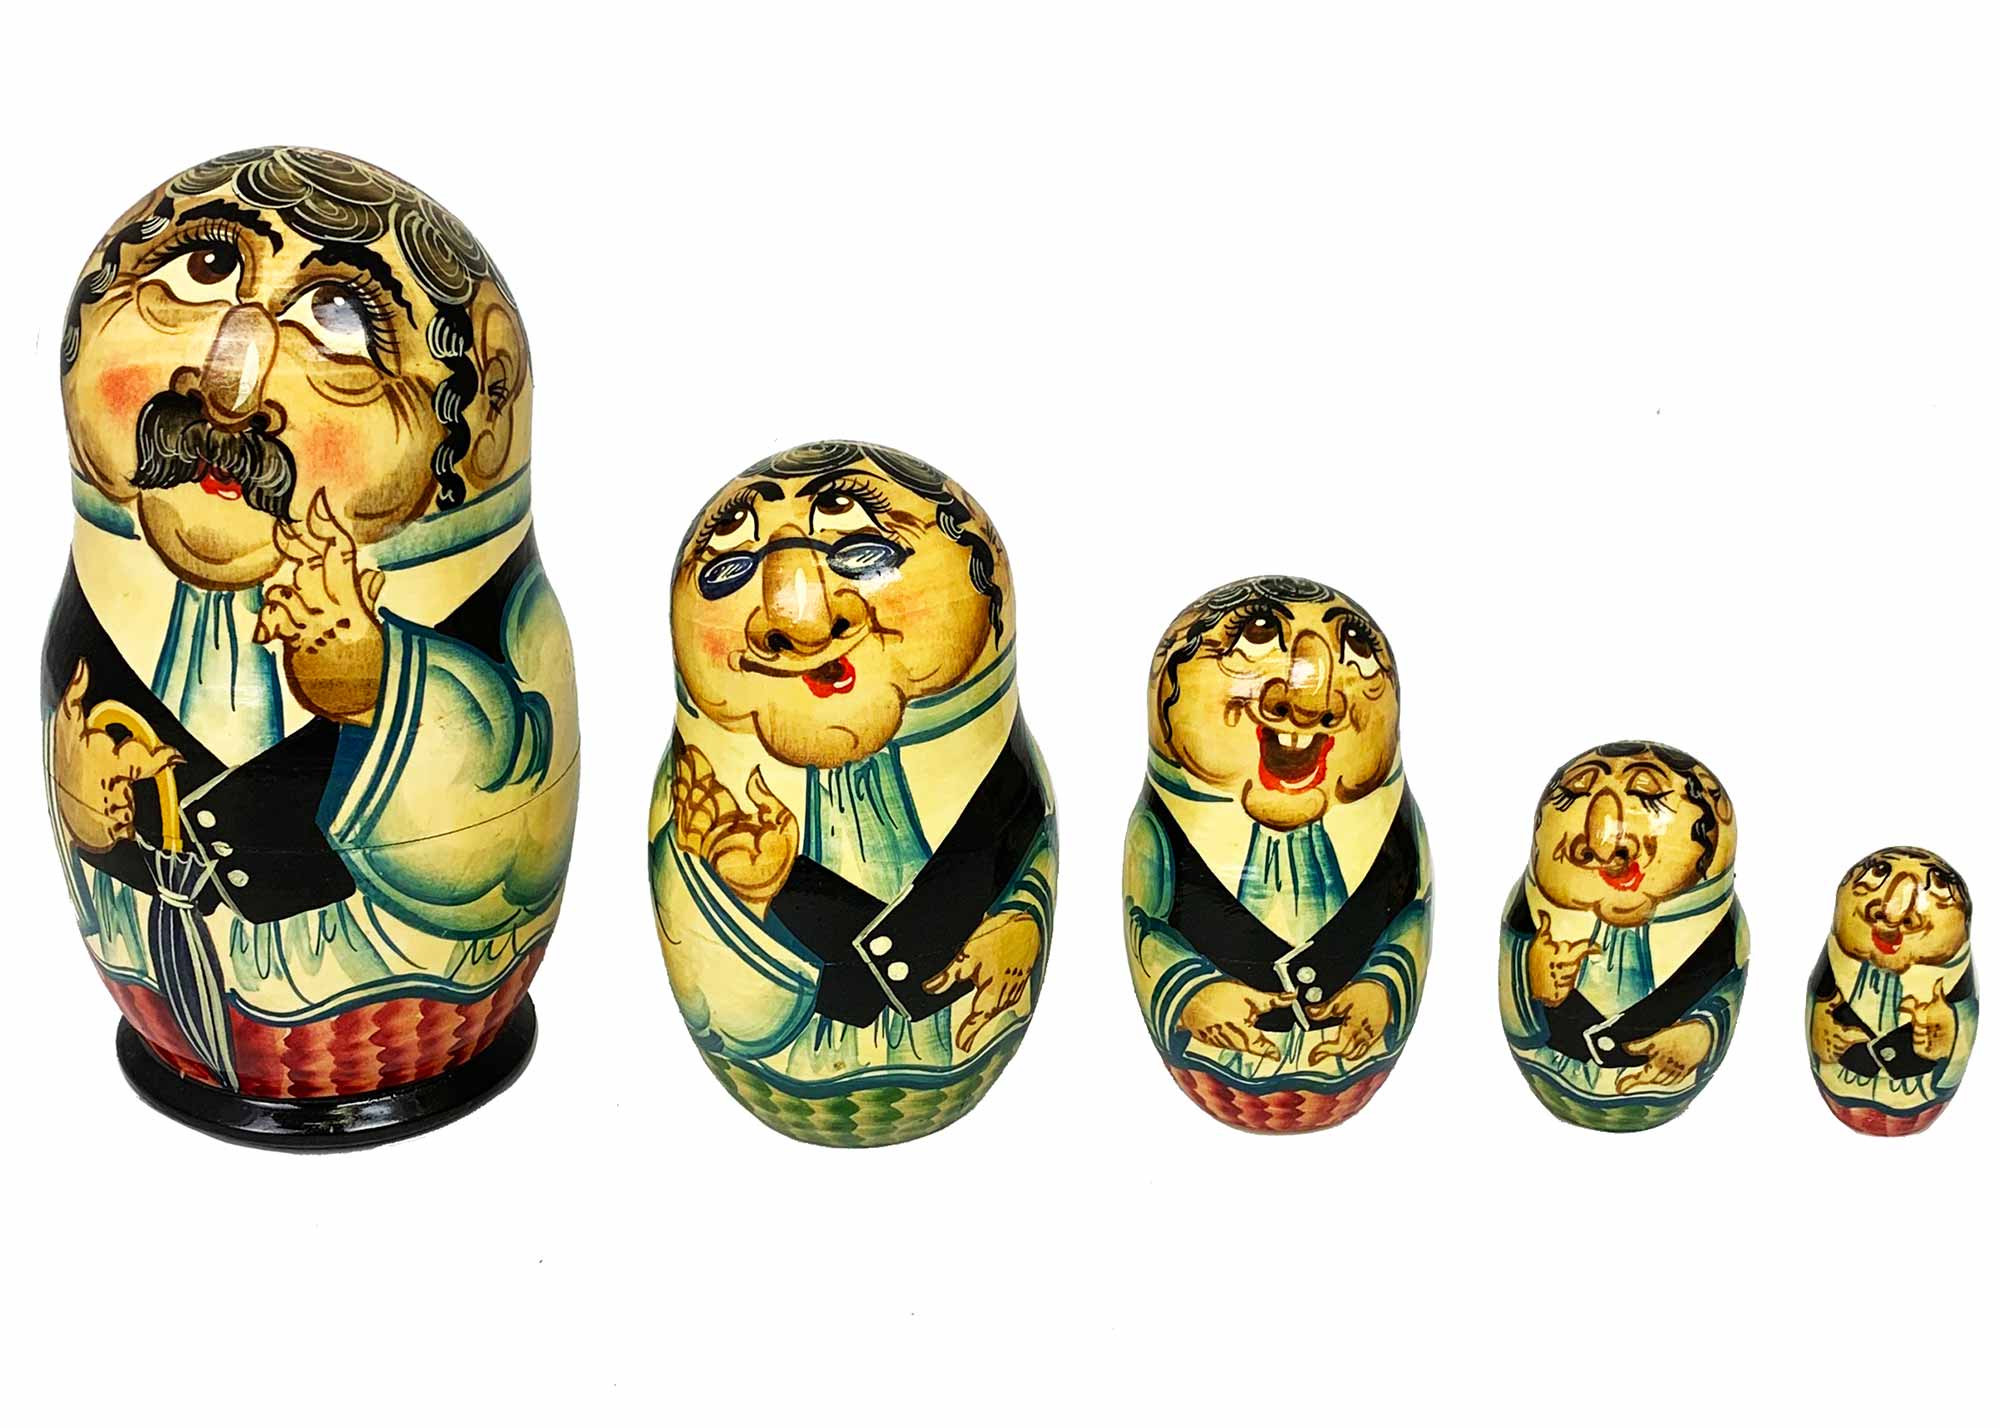 Buy Vintage Orthodox Rabbi Nesting Doll 5pc./7" at GoldenCockerel.com